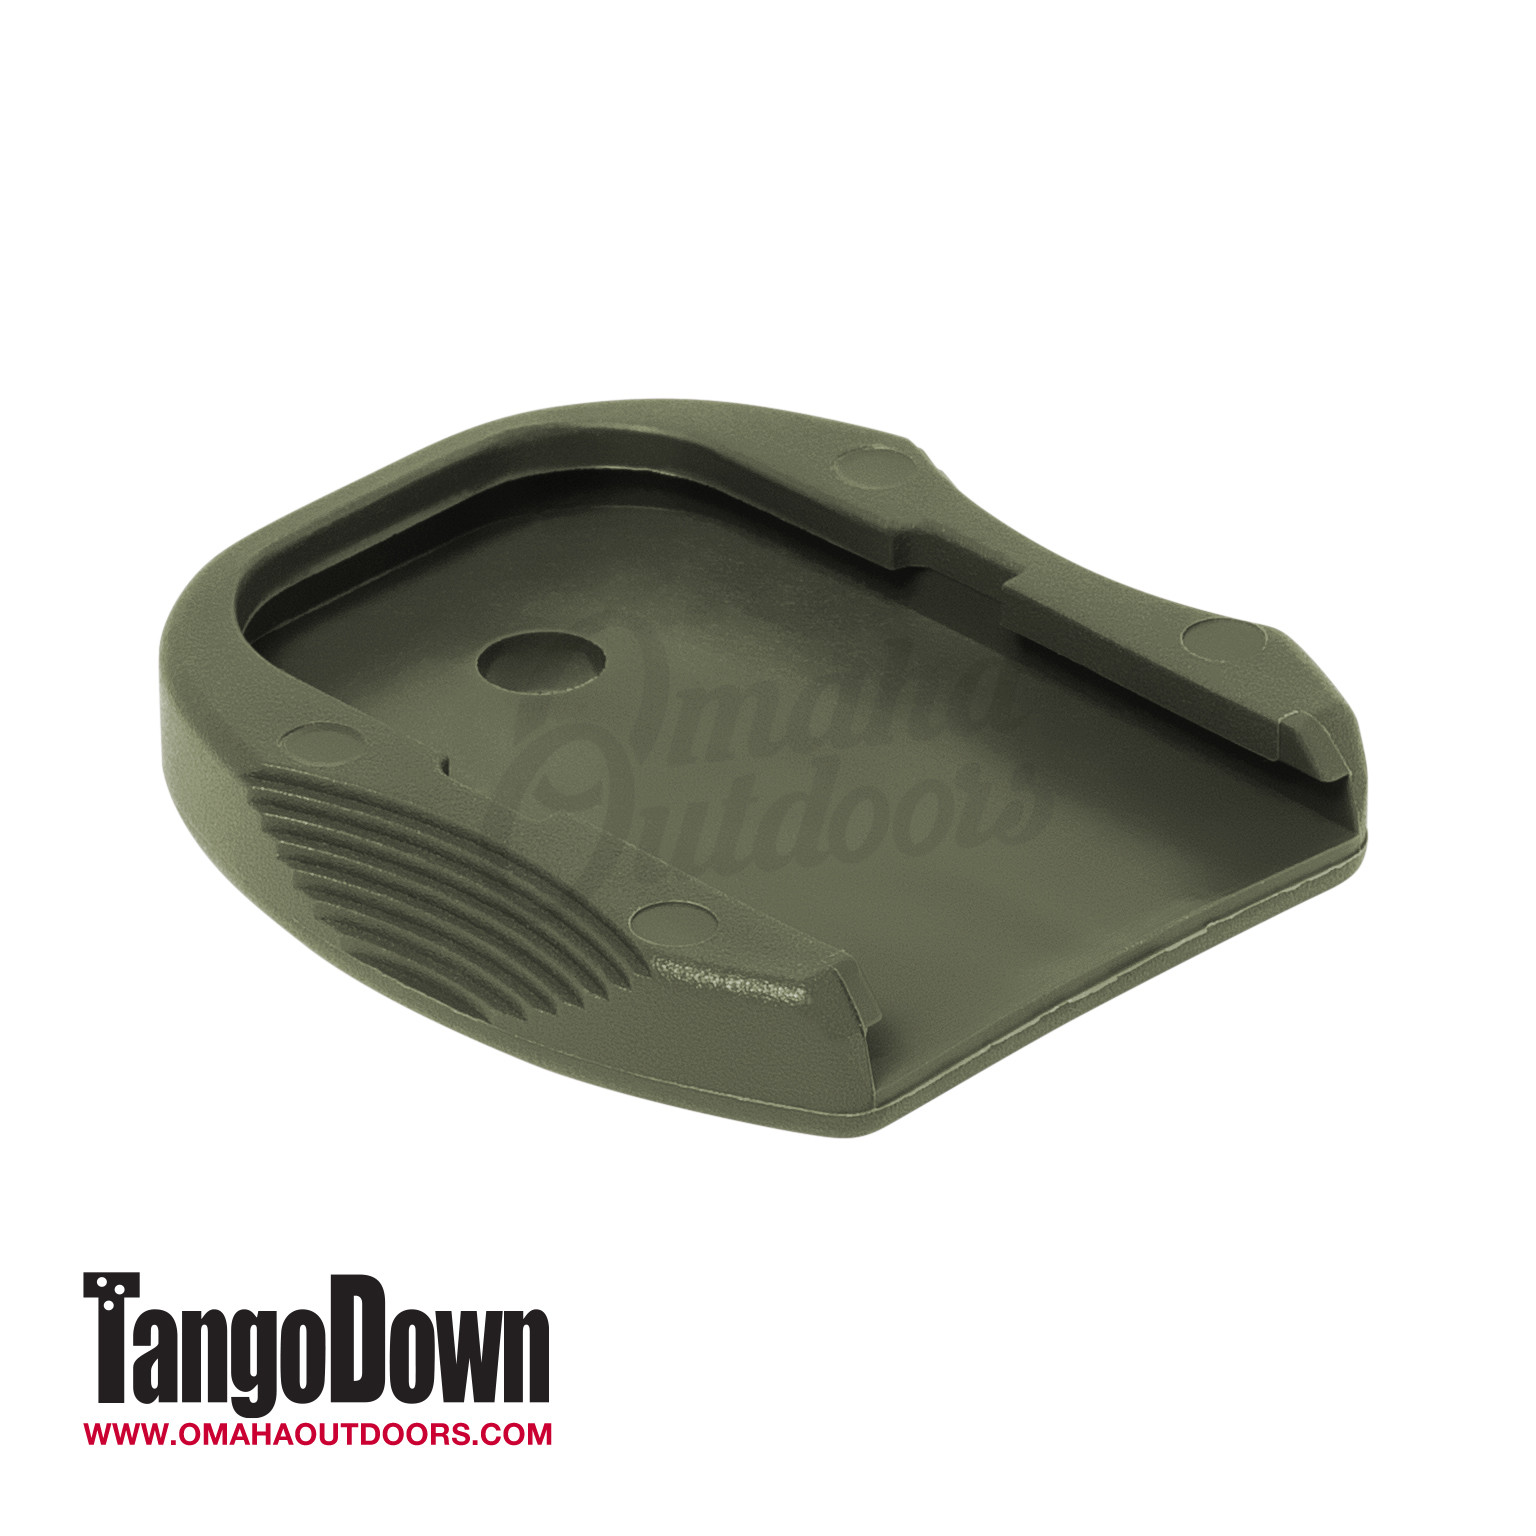 Tangodown Vickers Tactical Magazine Floor Plate 5 Pack Glock 17 19